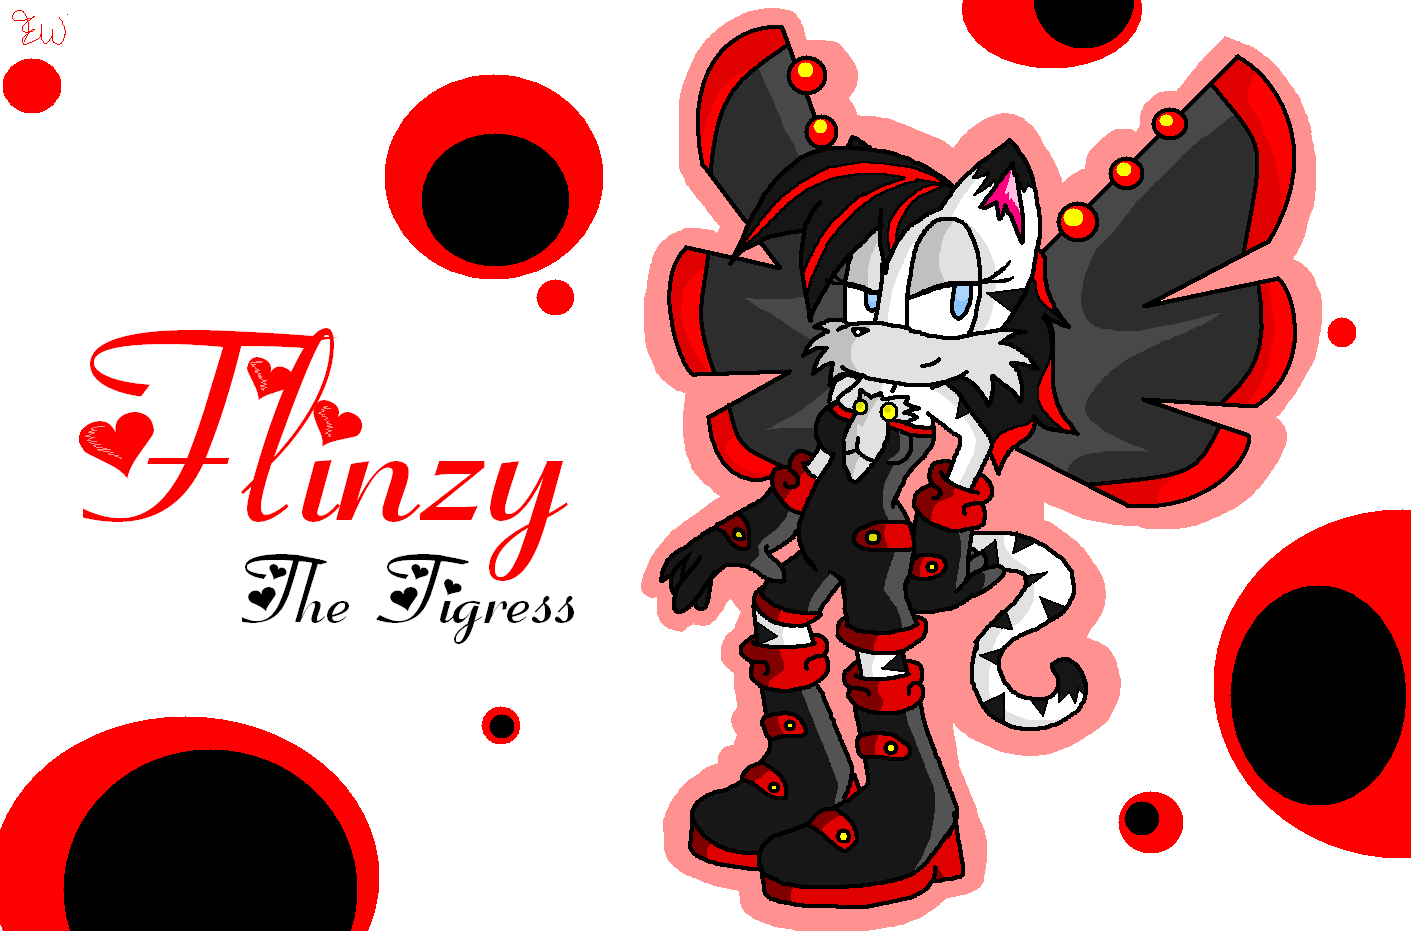 Flinzy the Tigress by Edge14